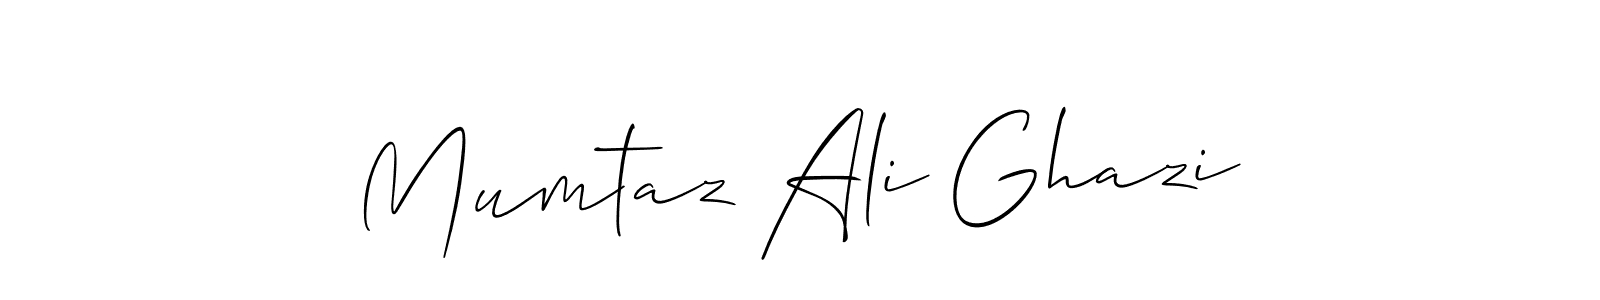 How to make Mumtaz Ali Ghazi signature? Allison_Script is a professional autograph style. Create handwritten signature for Mumtaz Ali Ghazi name. Mumtaz Ali Ghazi signature style 2 images and pictures png